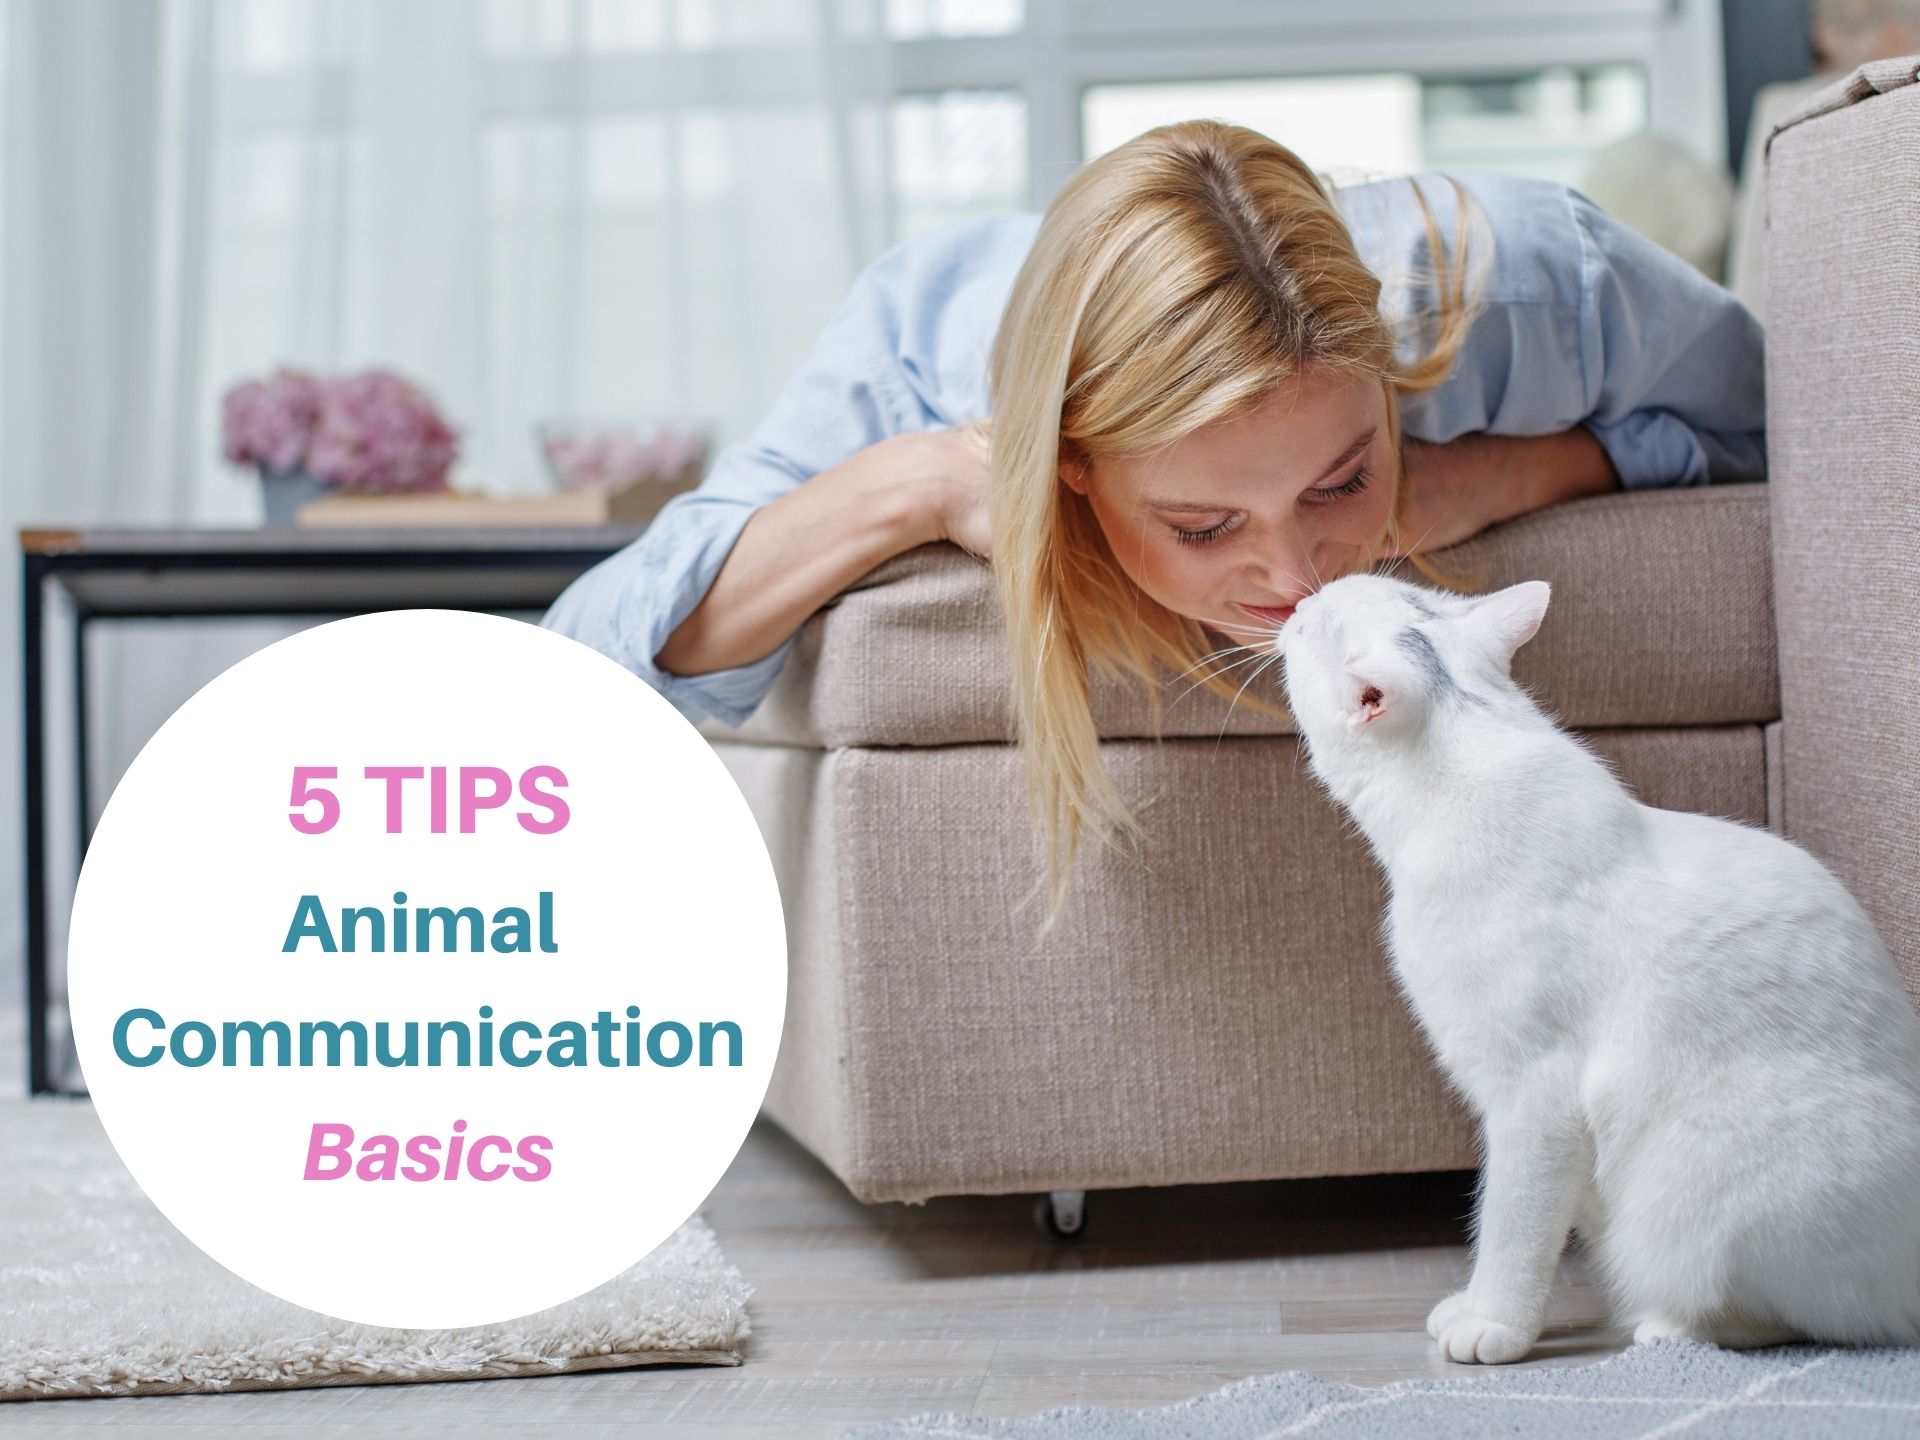 5 Tips For Basic Animal Communication - Animal Thoughts